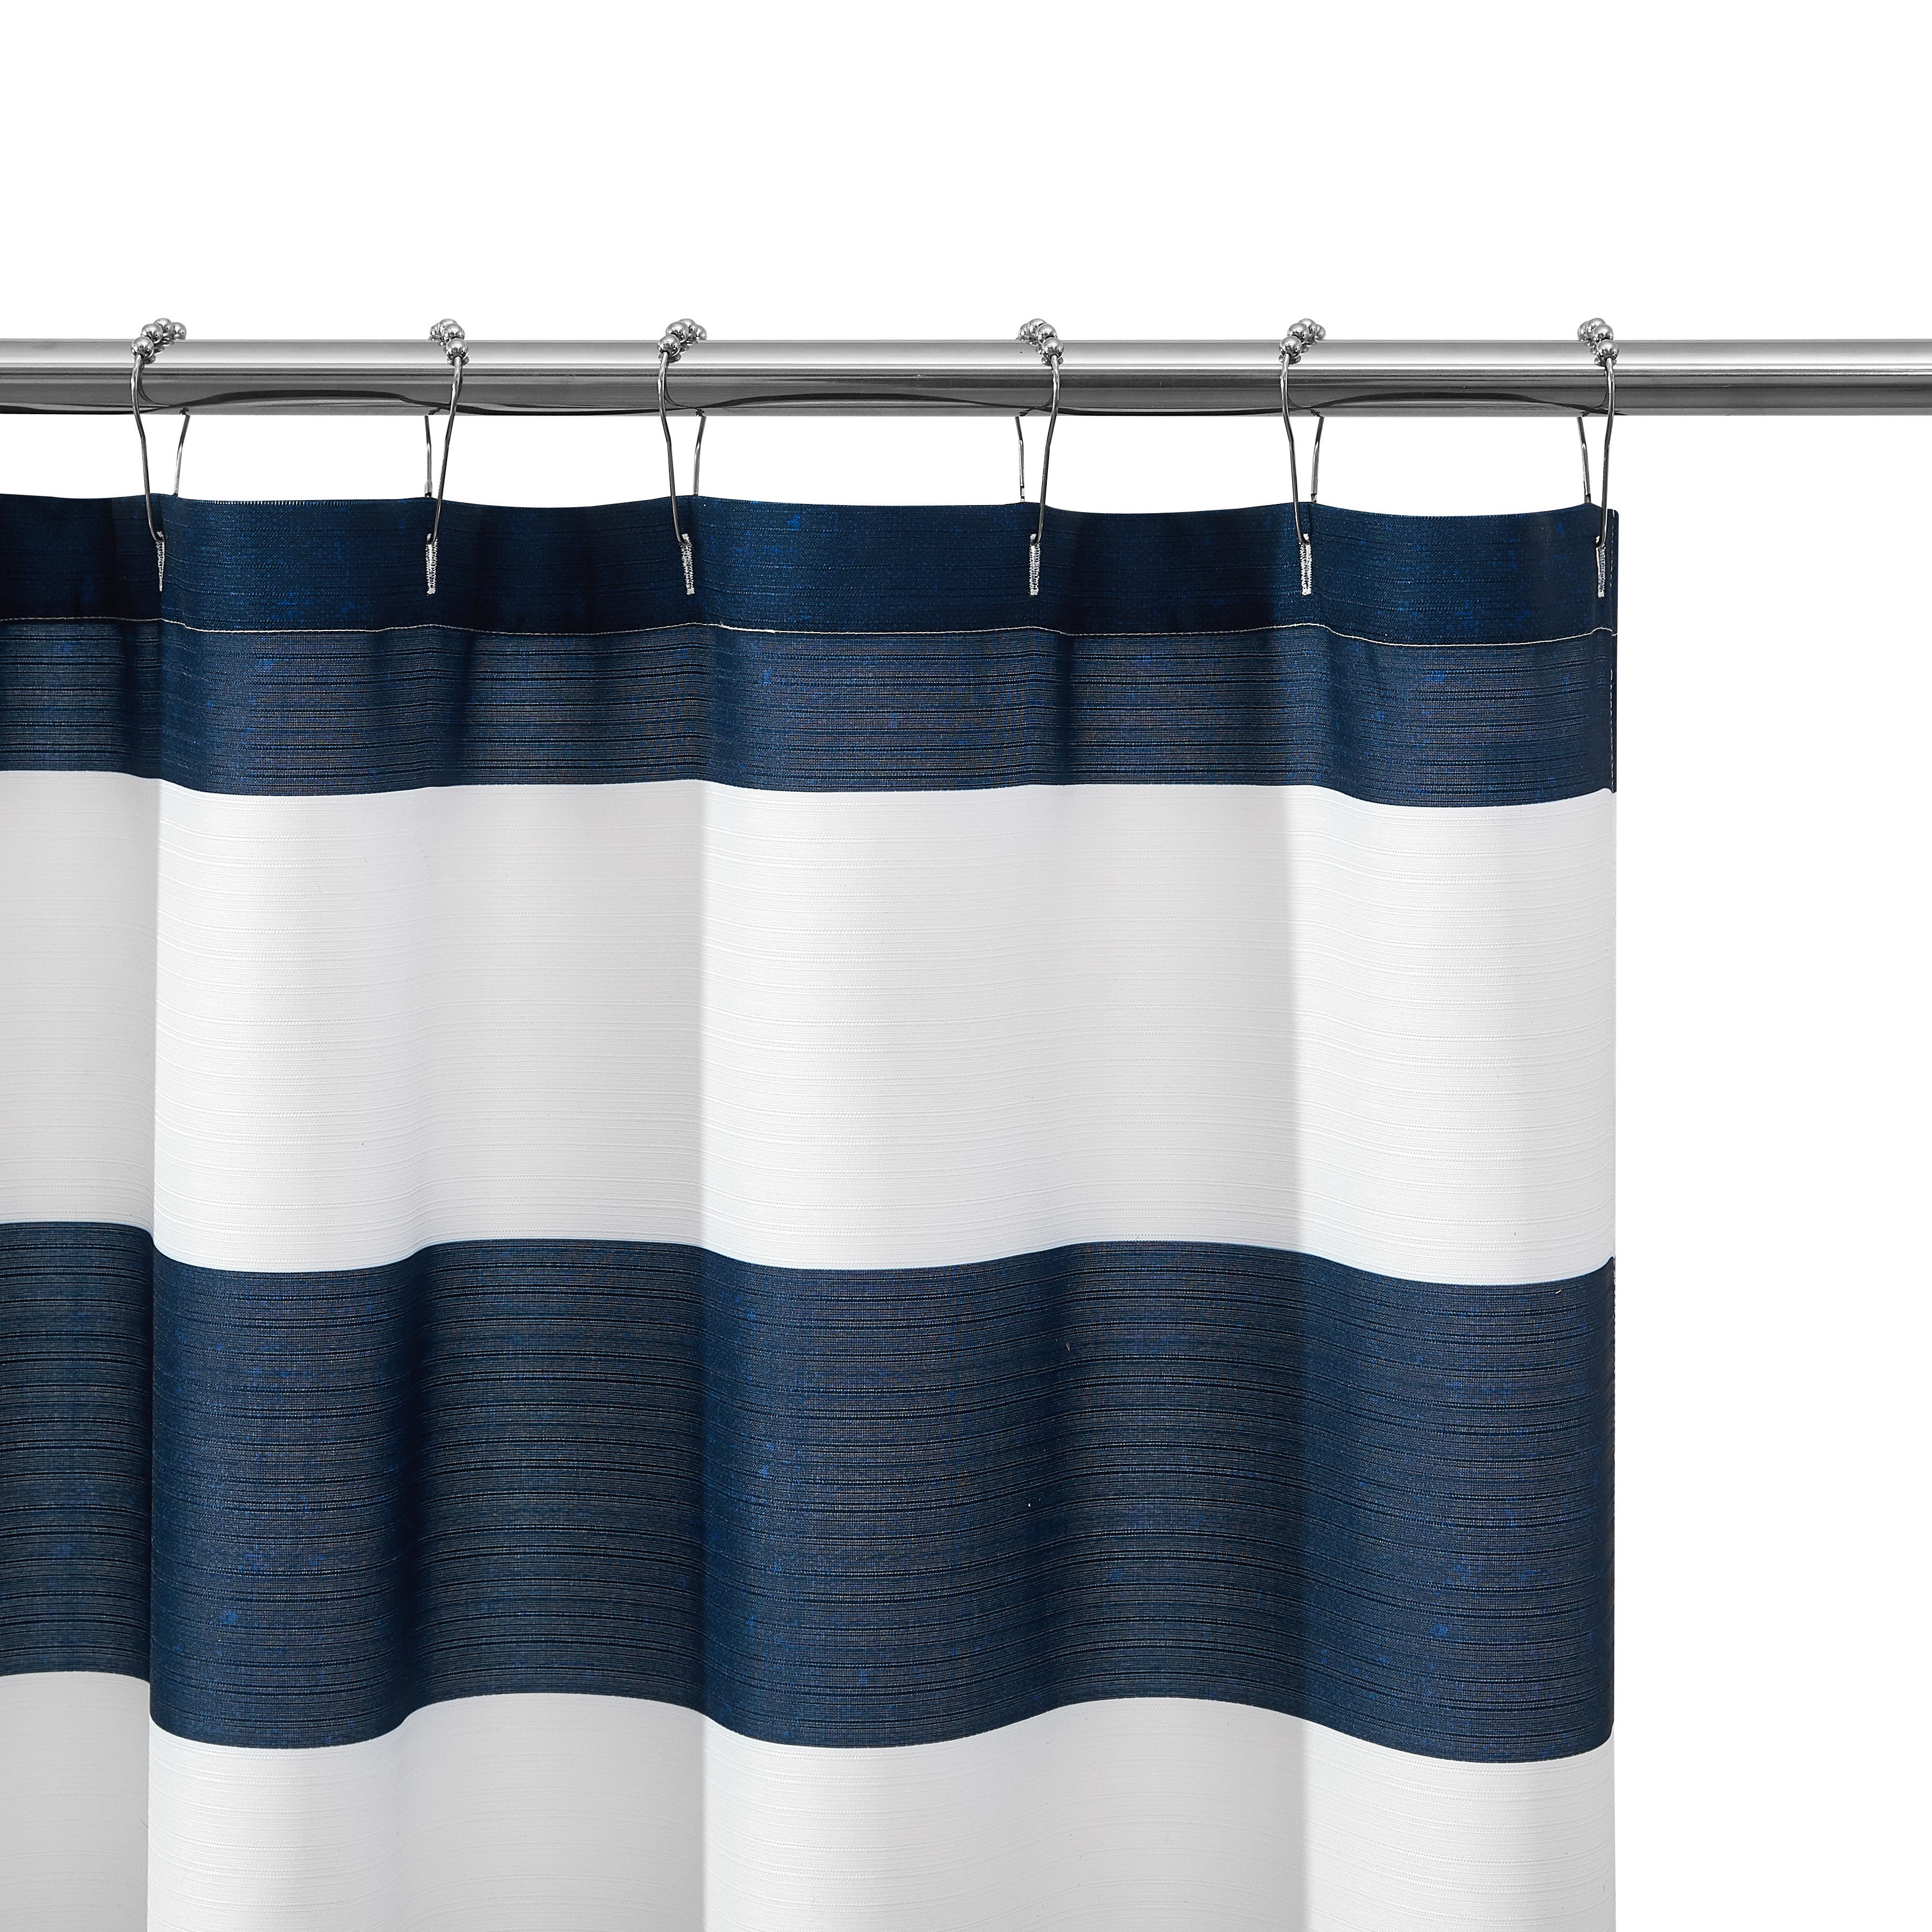  Hotel Balfour Premium Quality Fabric Shower Curtain Luxury  Turkey Modern Home Bathroom Decor Bathtub Privacy Screen Fringe at Bottom  100% Cotton 72 x 72 (White with Light Blue Stripes) : Home